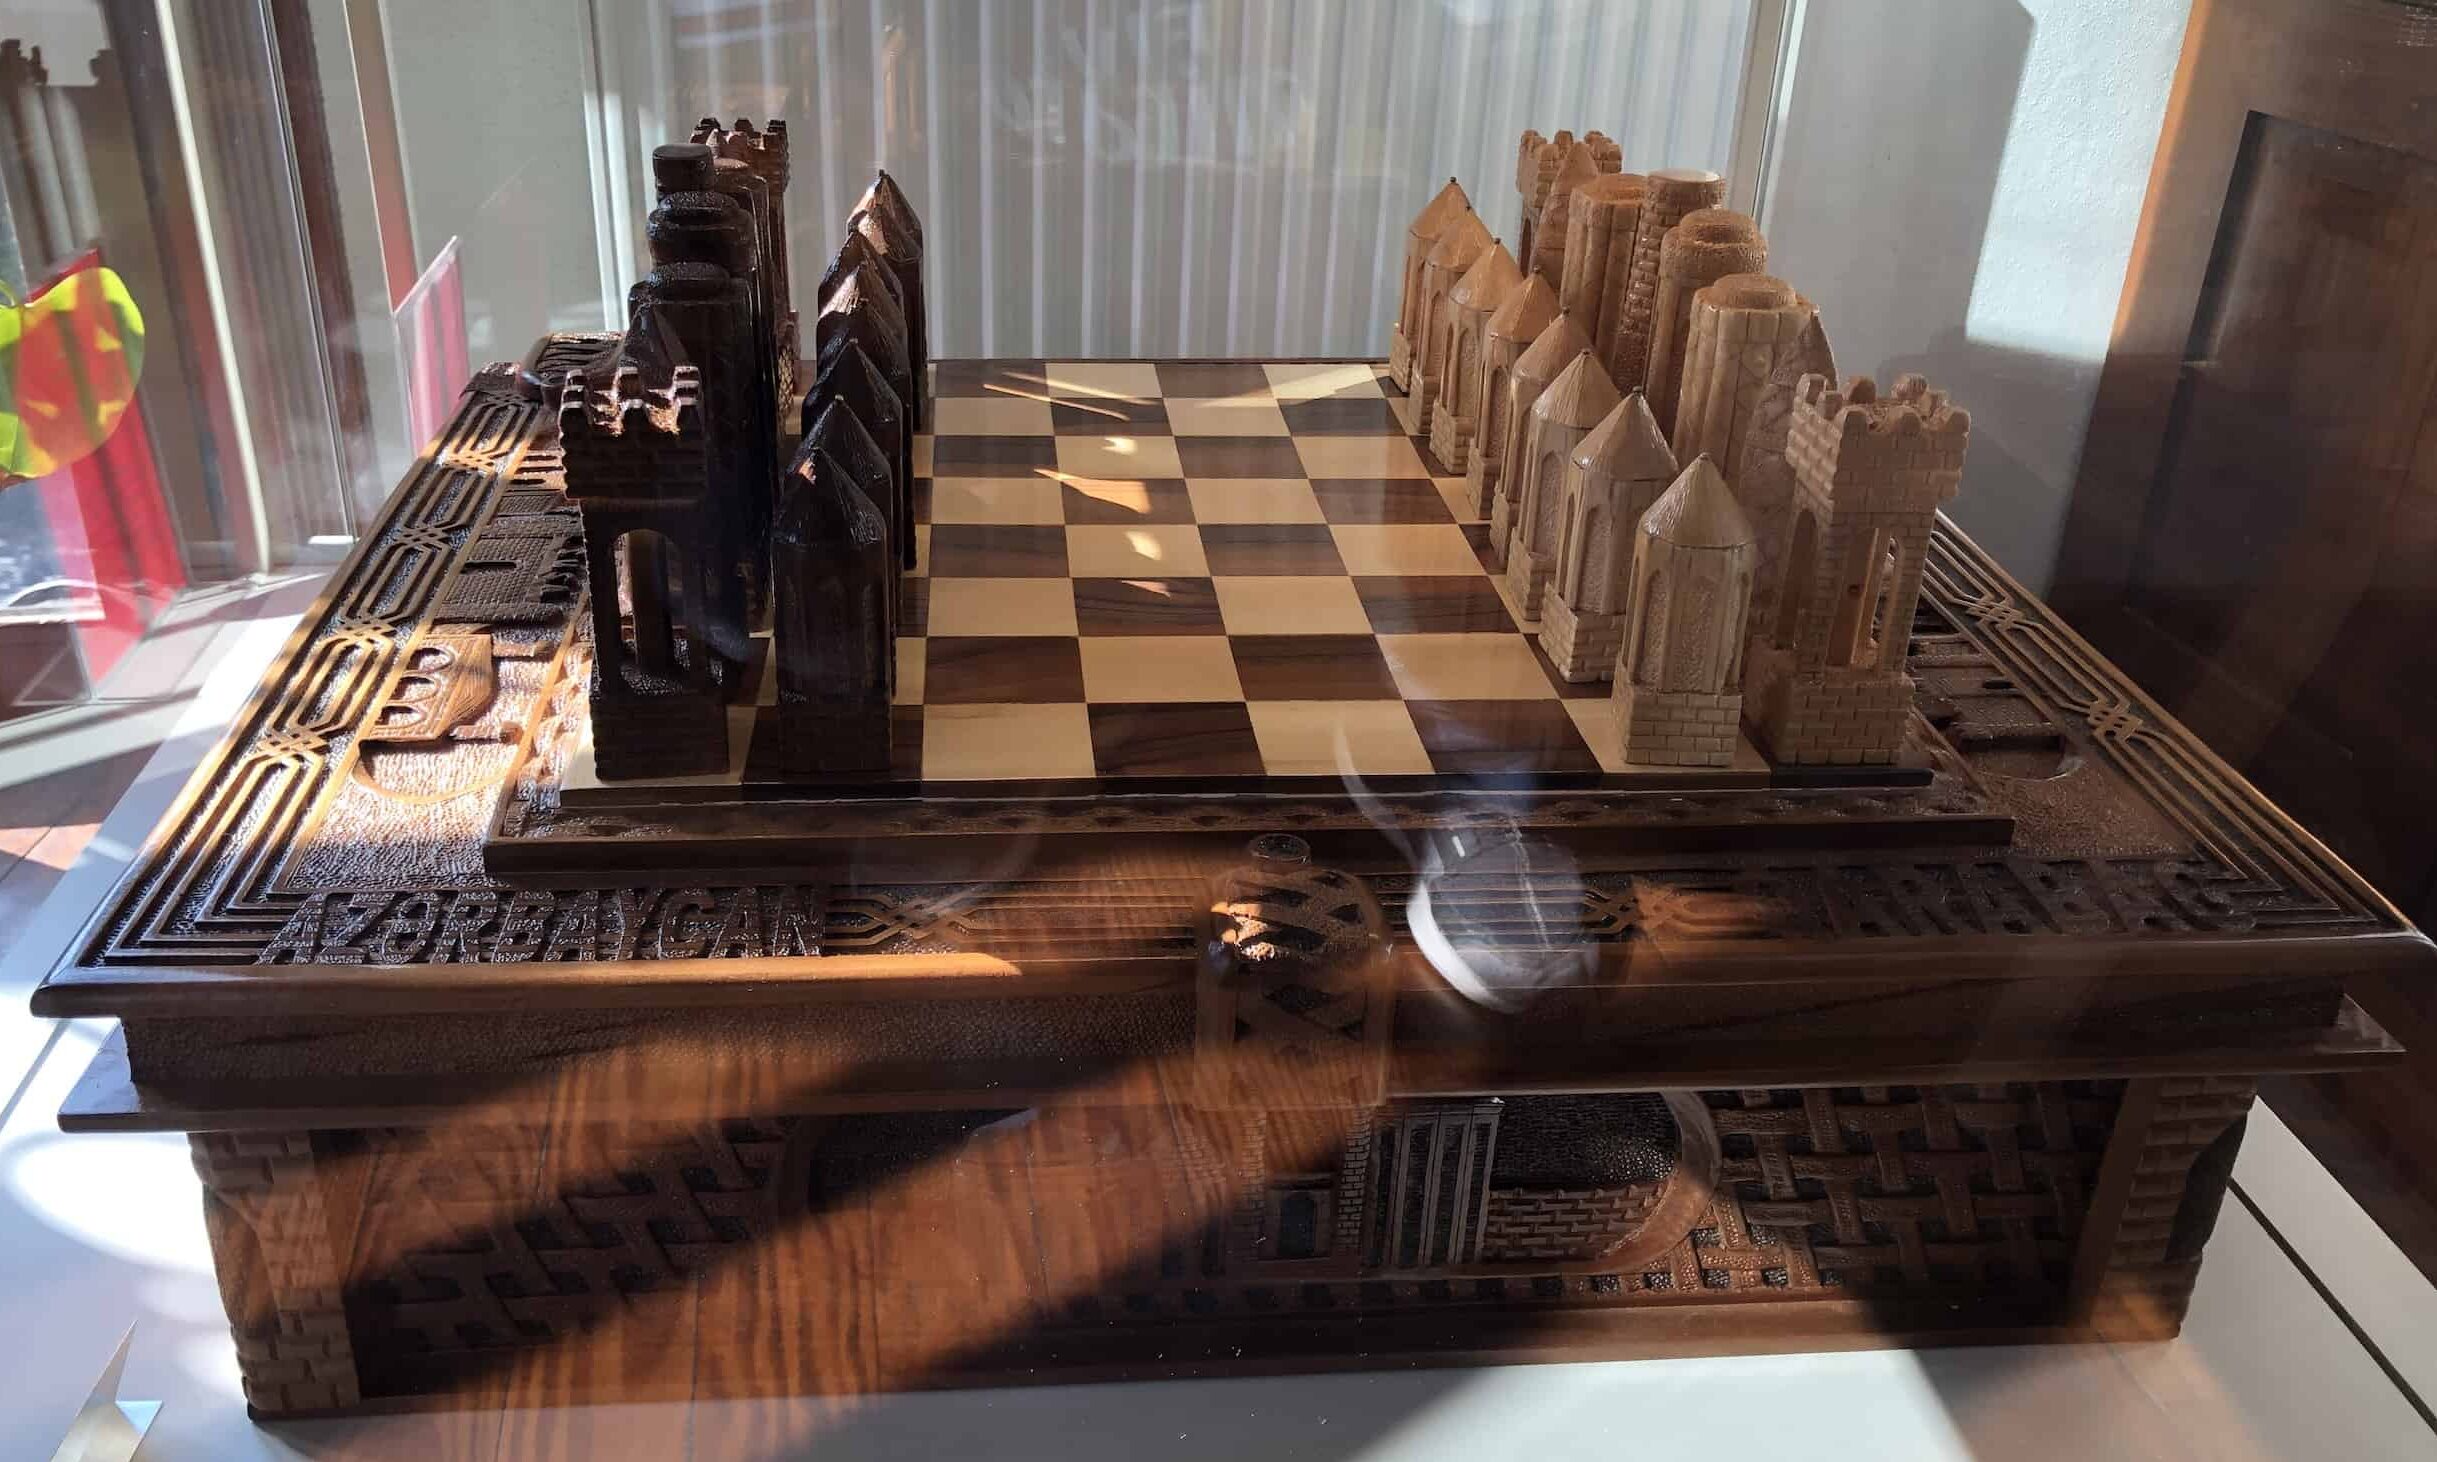 Wooden chess set (Azerbaijan)